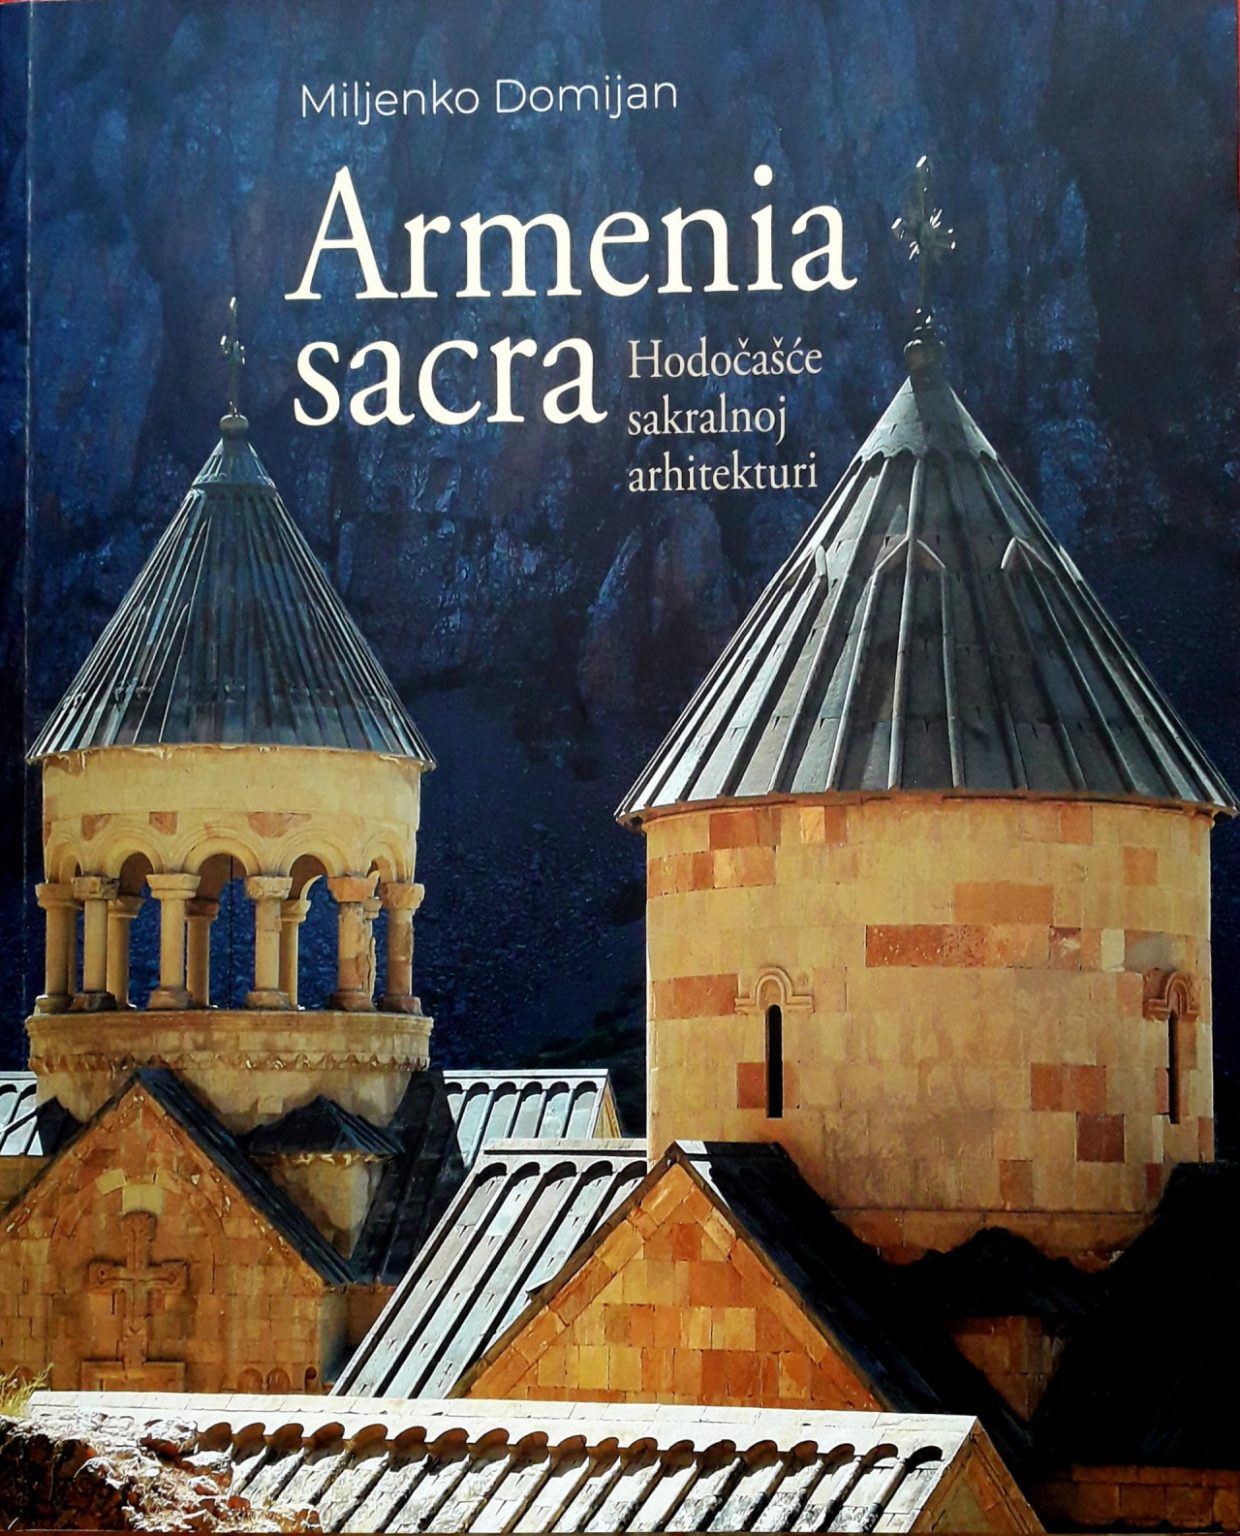 Armenia Sacra nasl 1240x1536